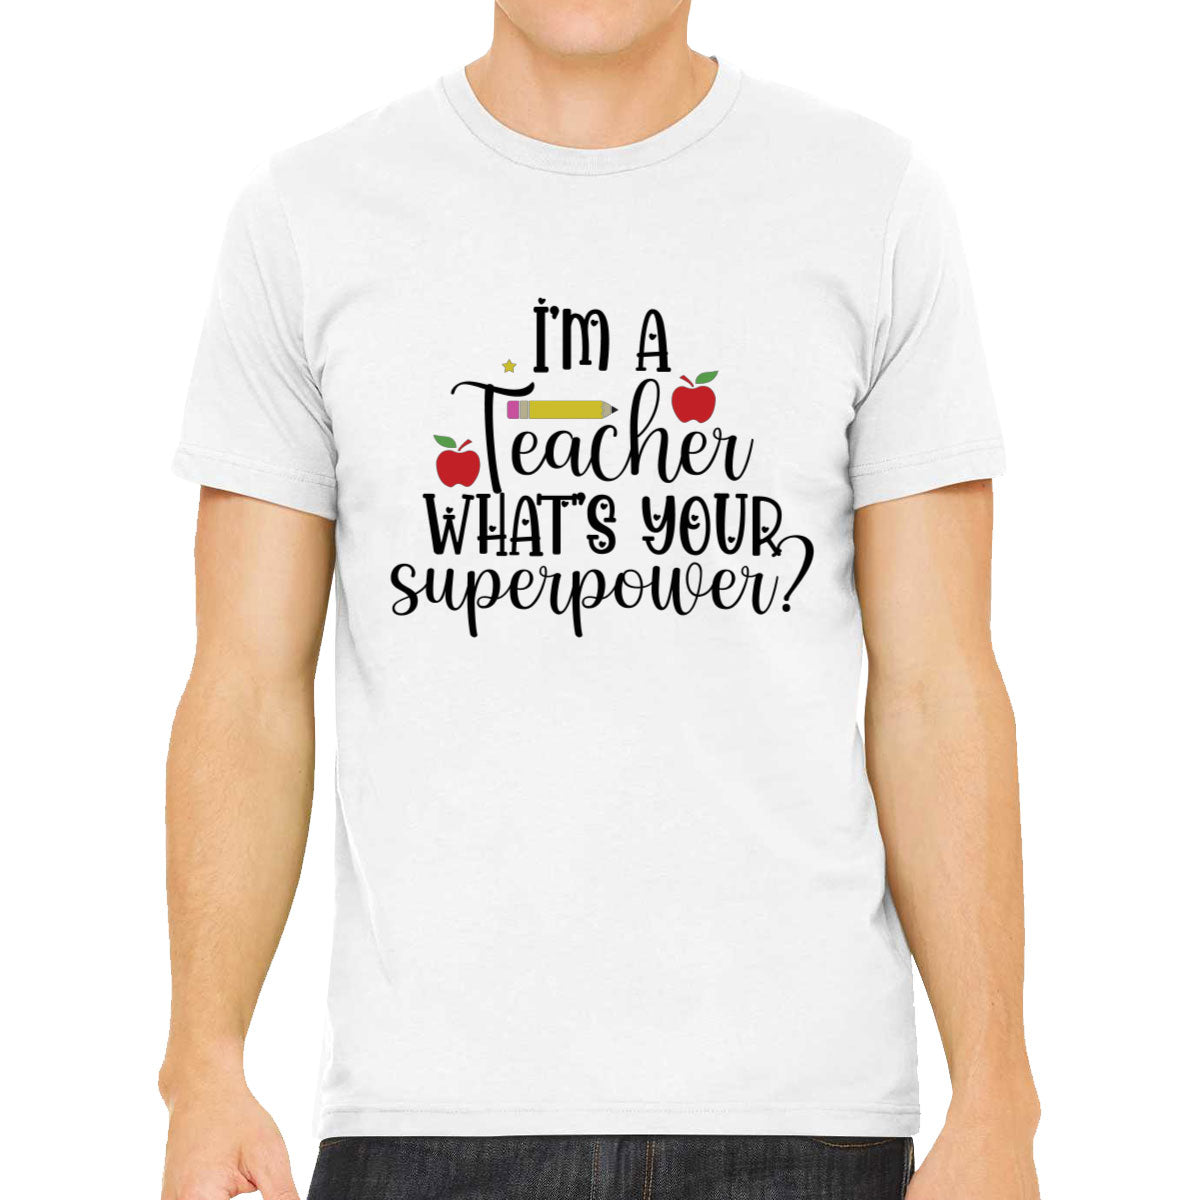 I'm A Teacher What's Your Superpower? Men's T-shirt